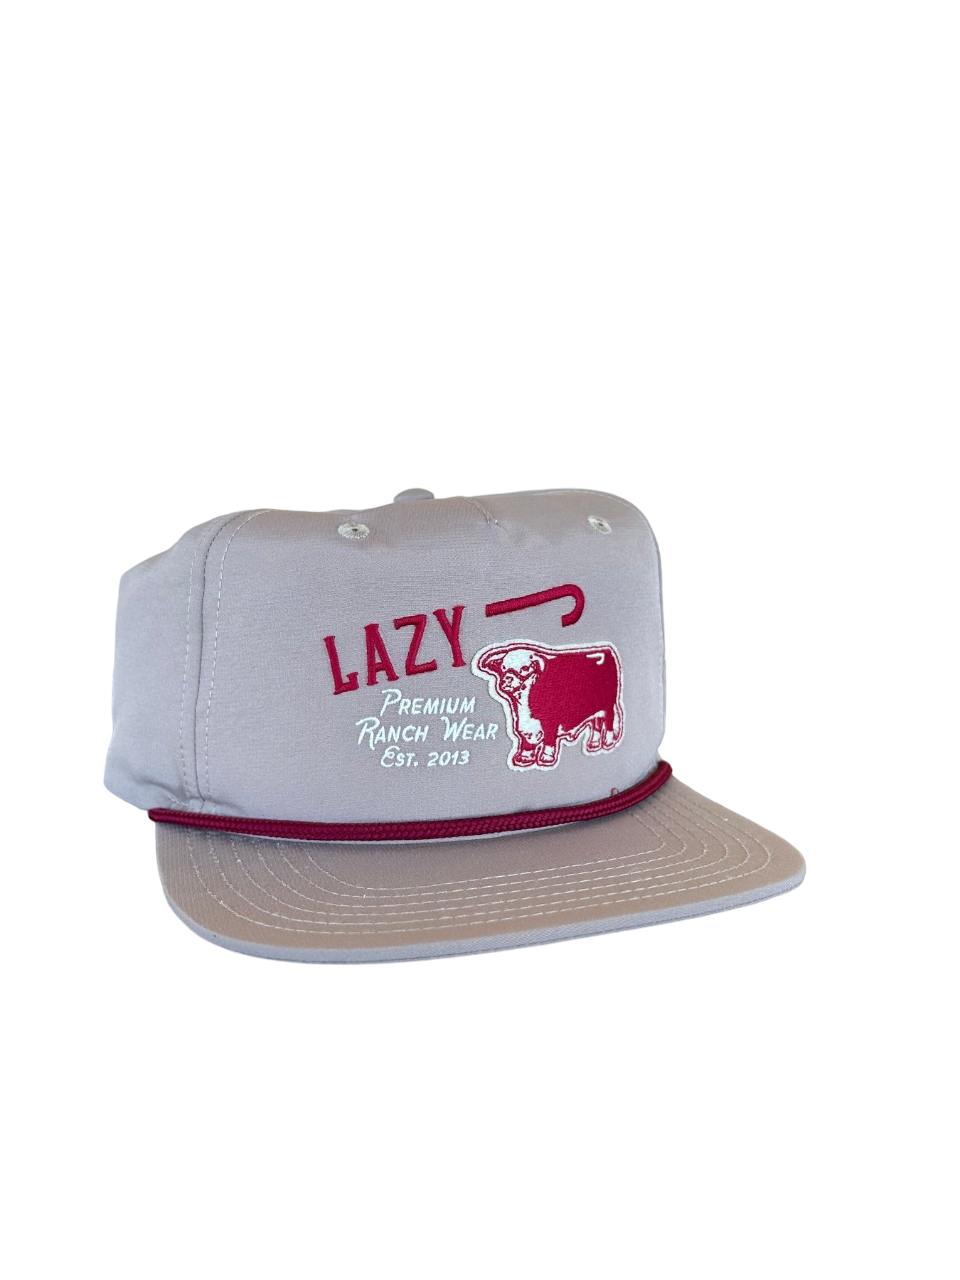 Lazy J Ranch Wear Khaki Premium Ranch Rope Cap